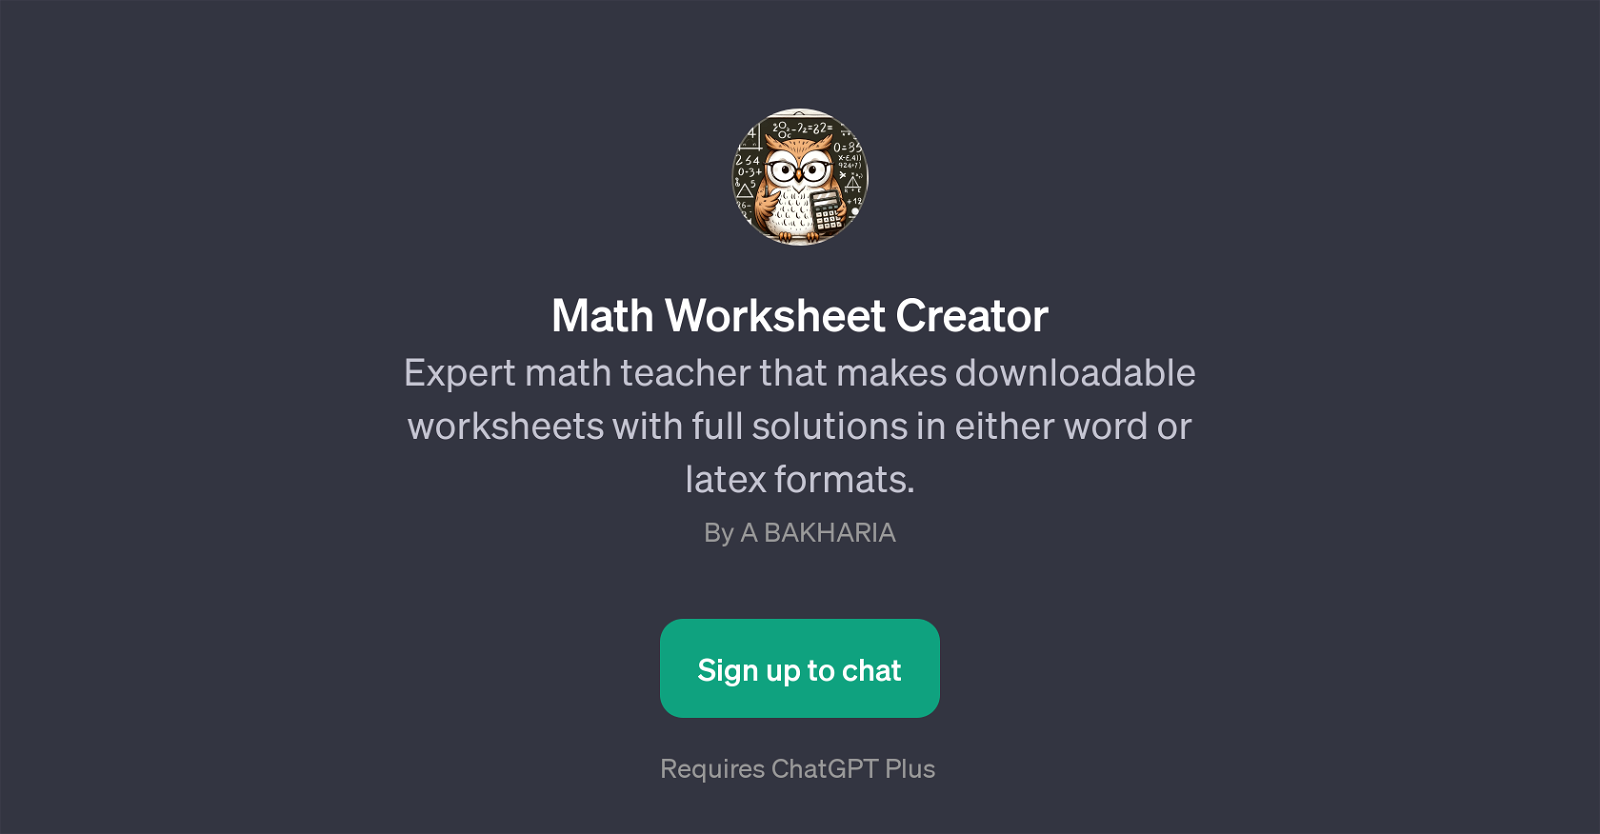 Math Worksheet Creator website